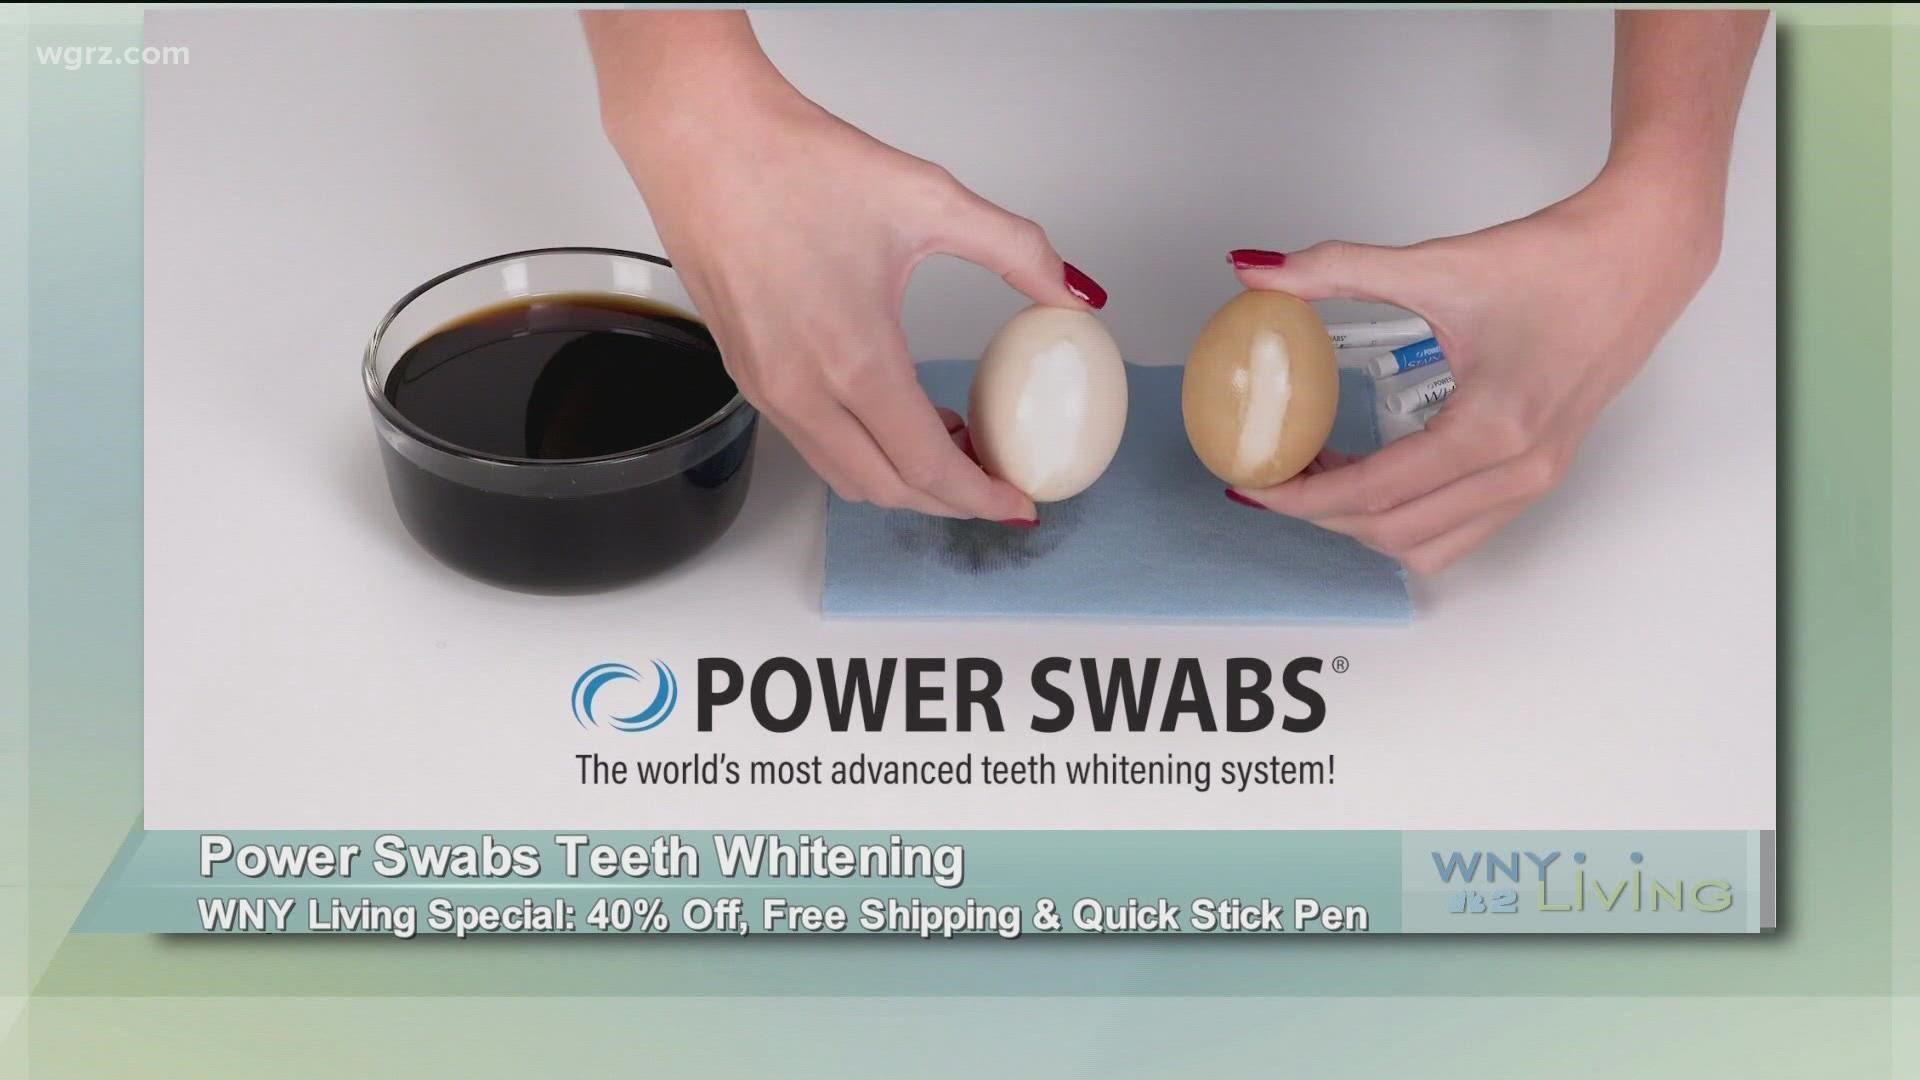 WNY Living - January 15 - Power Swabs Teeth Whitening (THIS VIDEO IS SPONSORED BY POWER SWABS TEETH WHITENING)